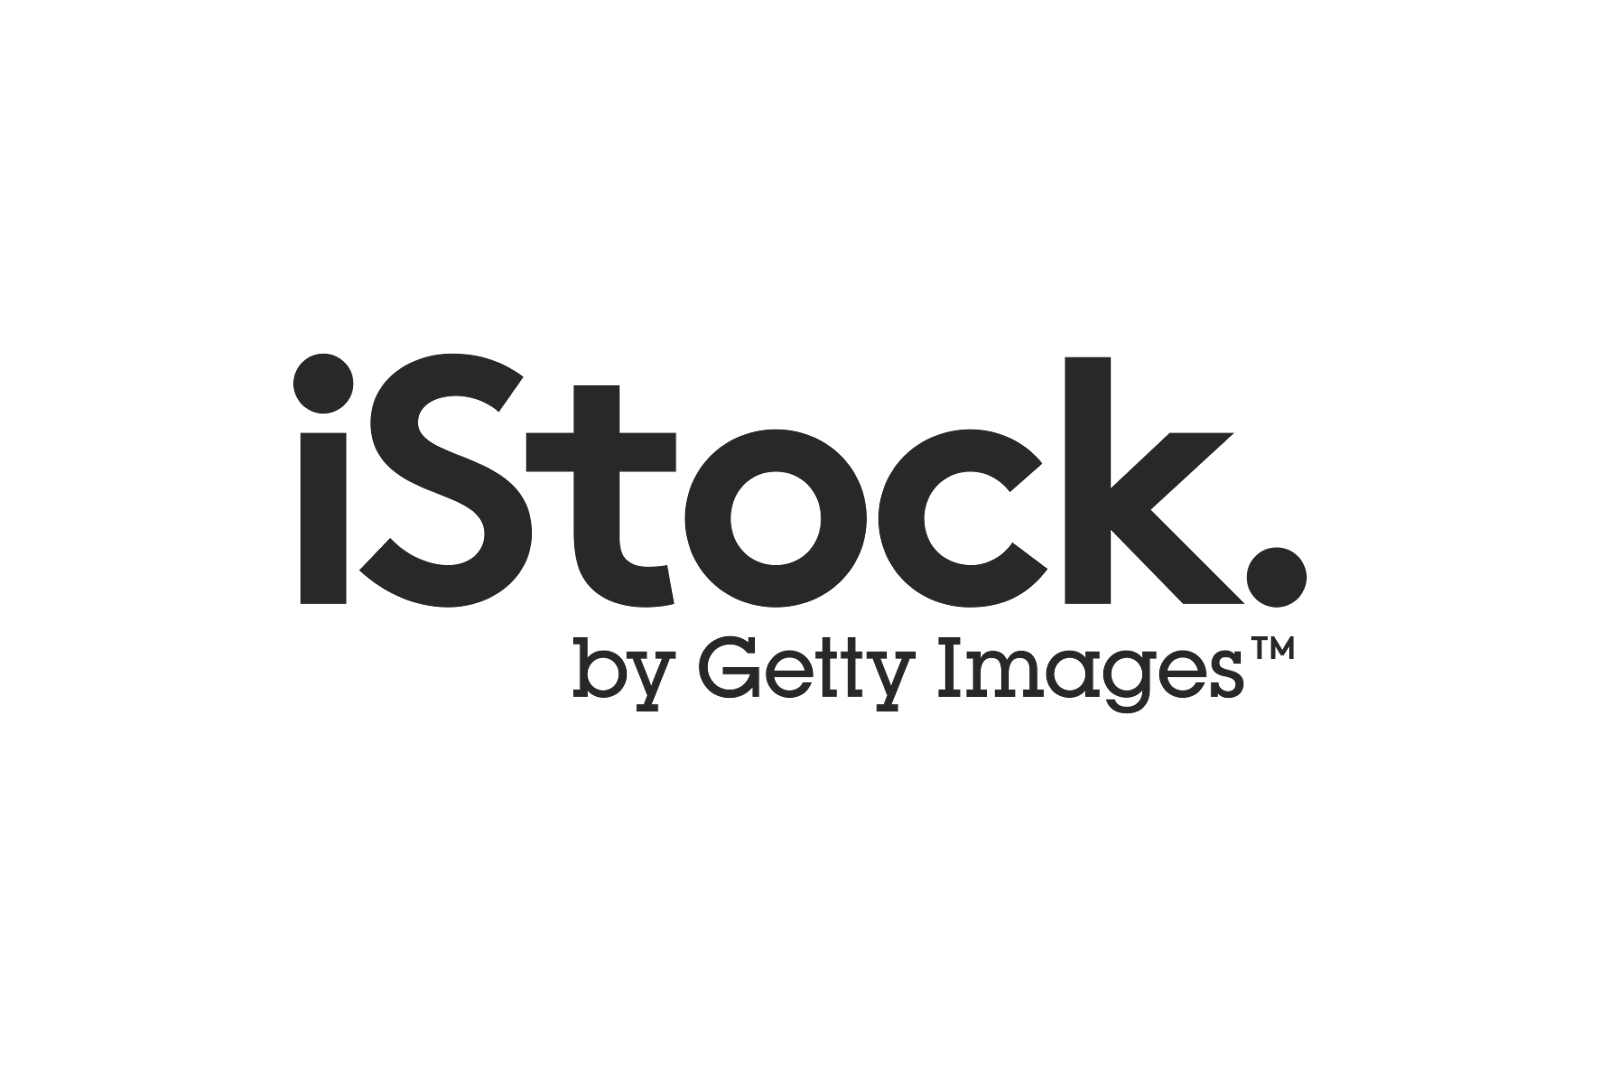 ISTOCK. Логотип айстока. Getty images логотип. ISTOCK Сток.